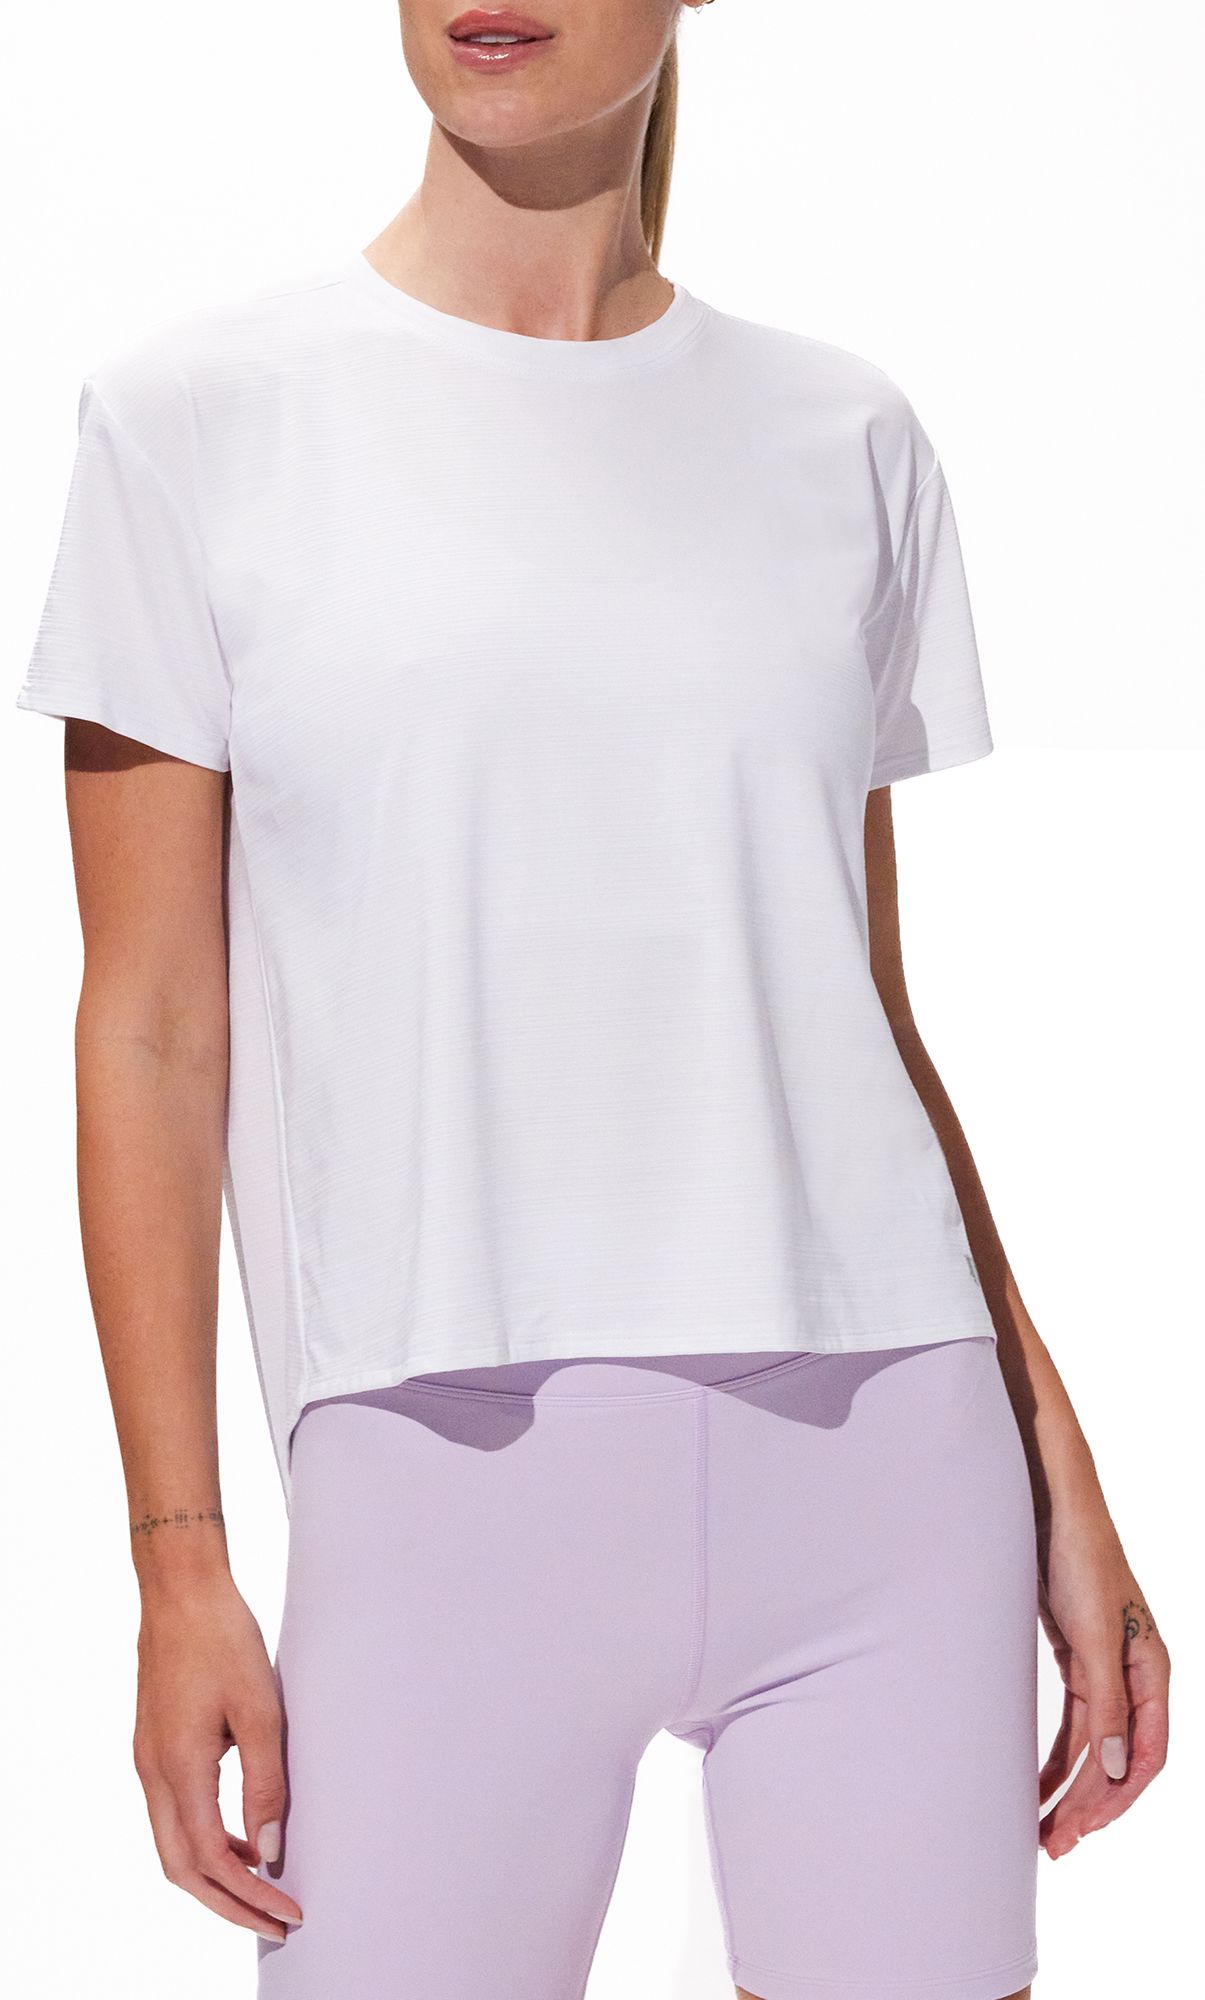 EleVen by Venus Williams Women's Rebel Active T-Shirt